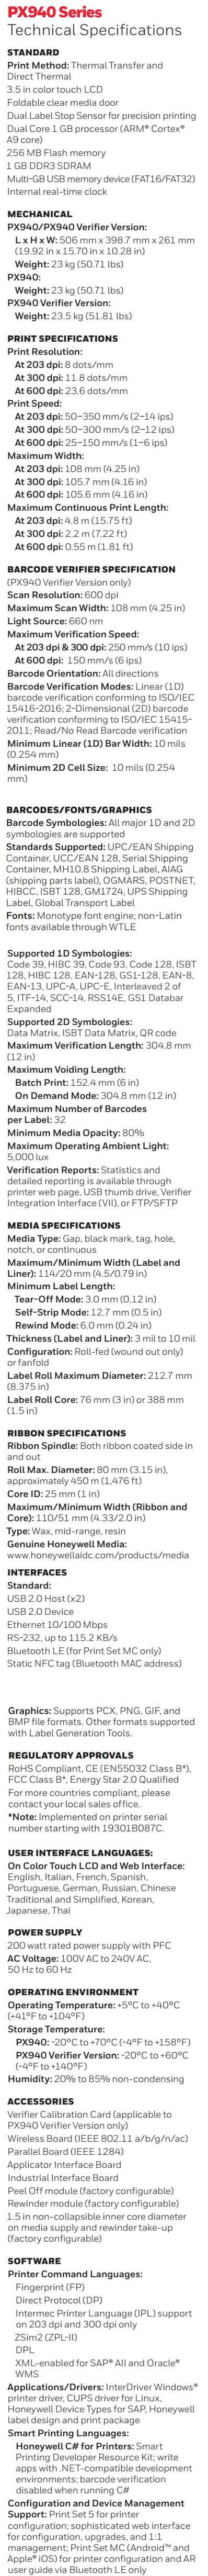 Honeywell PX940 Industrial Printer datasheet